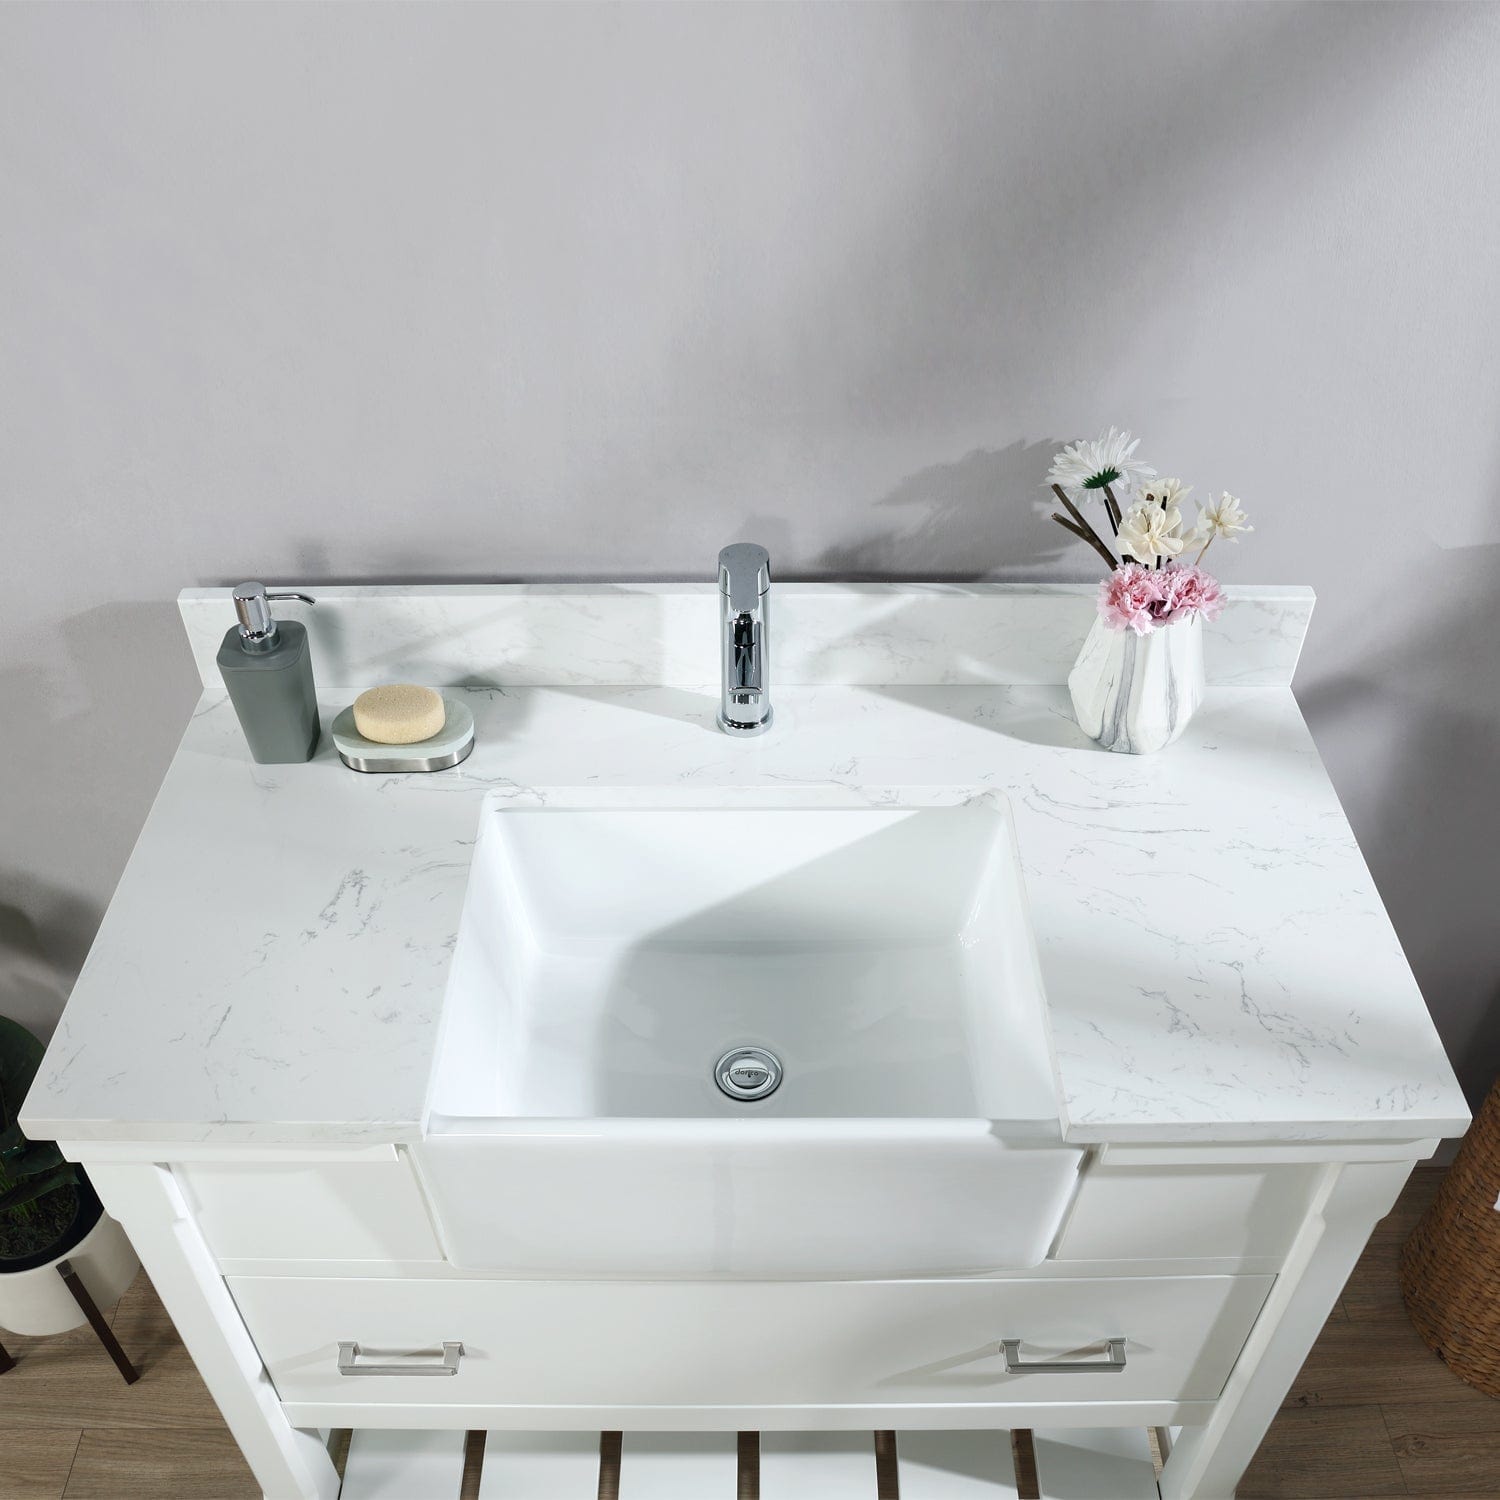 Altair Georgia 42" Single Bathroom Vanity Set in White and Composite Carrara White Stone Top with White Farmhouse Basin without Mirror 537042-WH-AW-NM - Molaix696952511321Vanity537042-WH-AW-NM